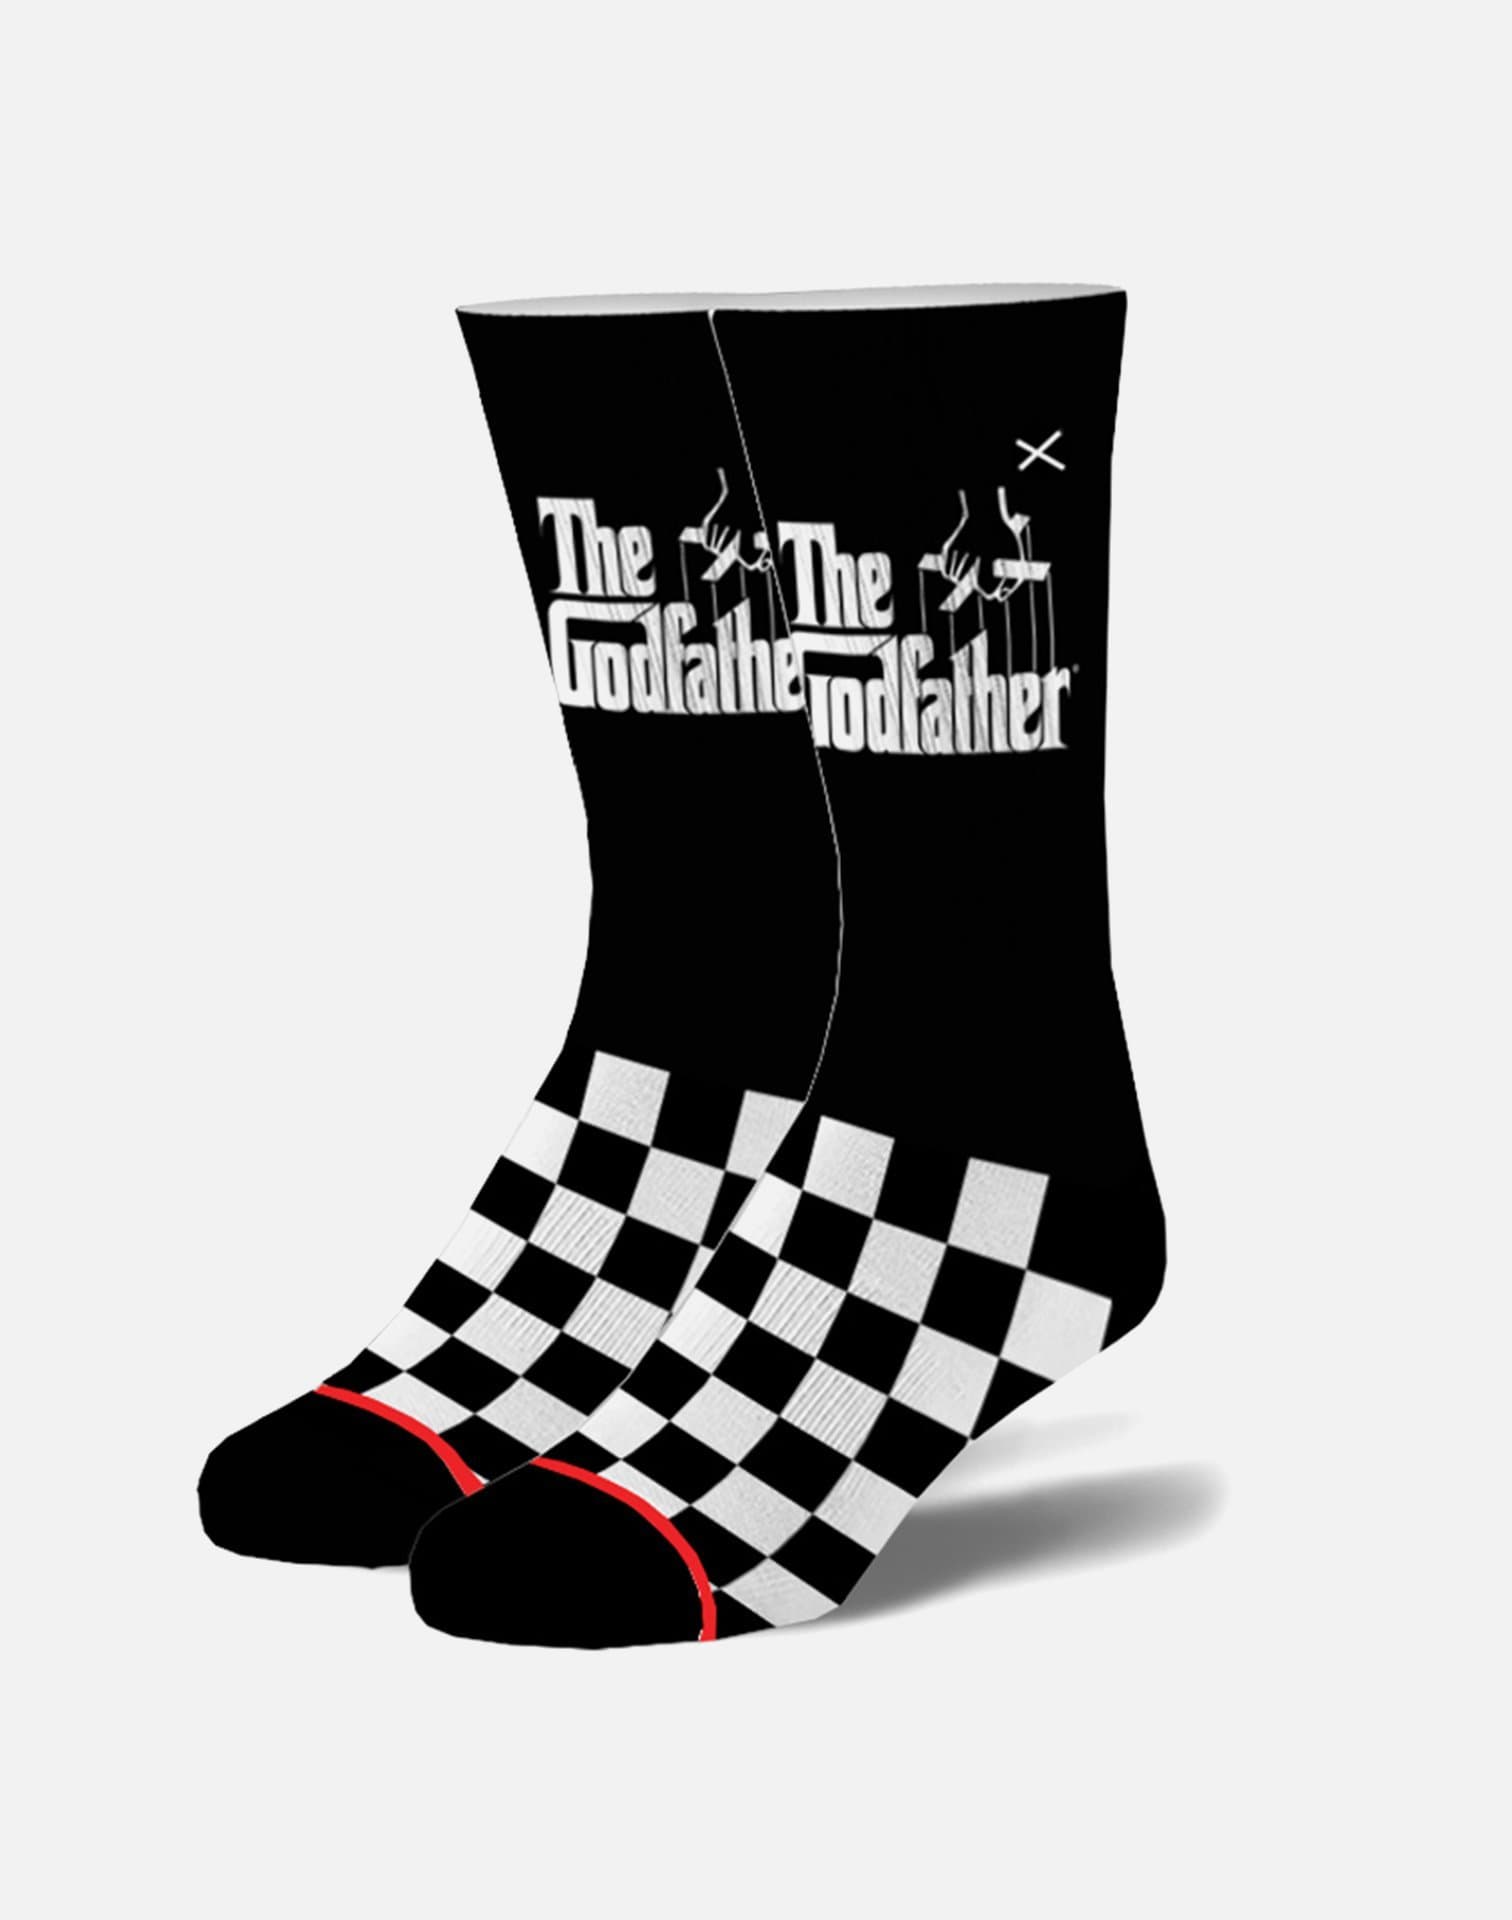 Odd Sox The Godfather Checkered Socks